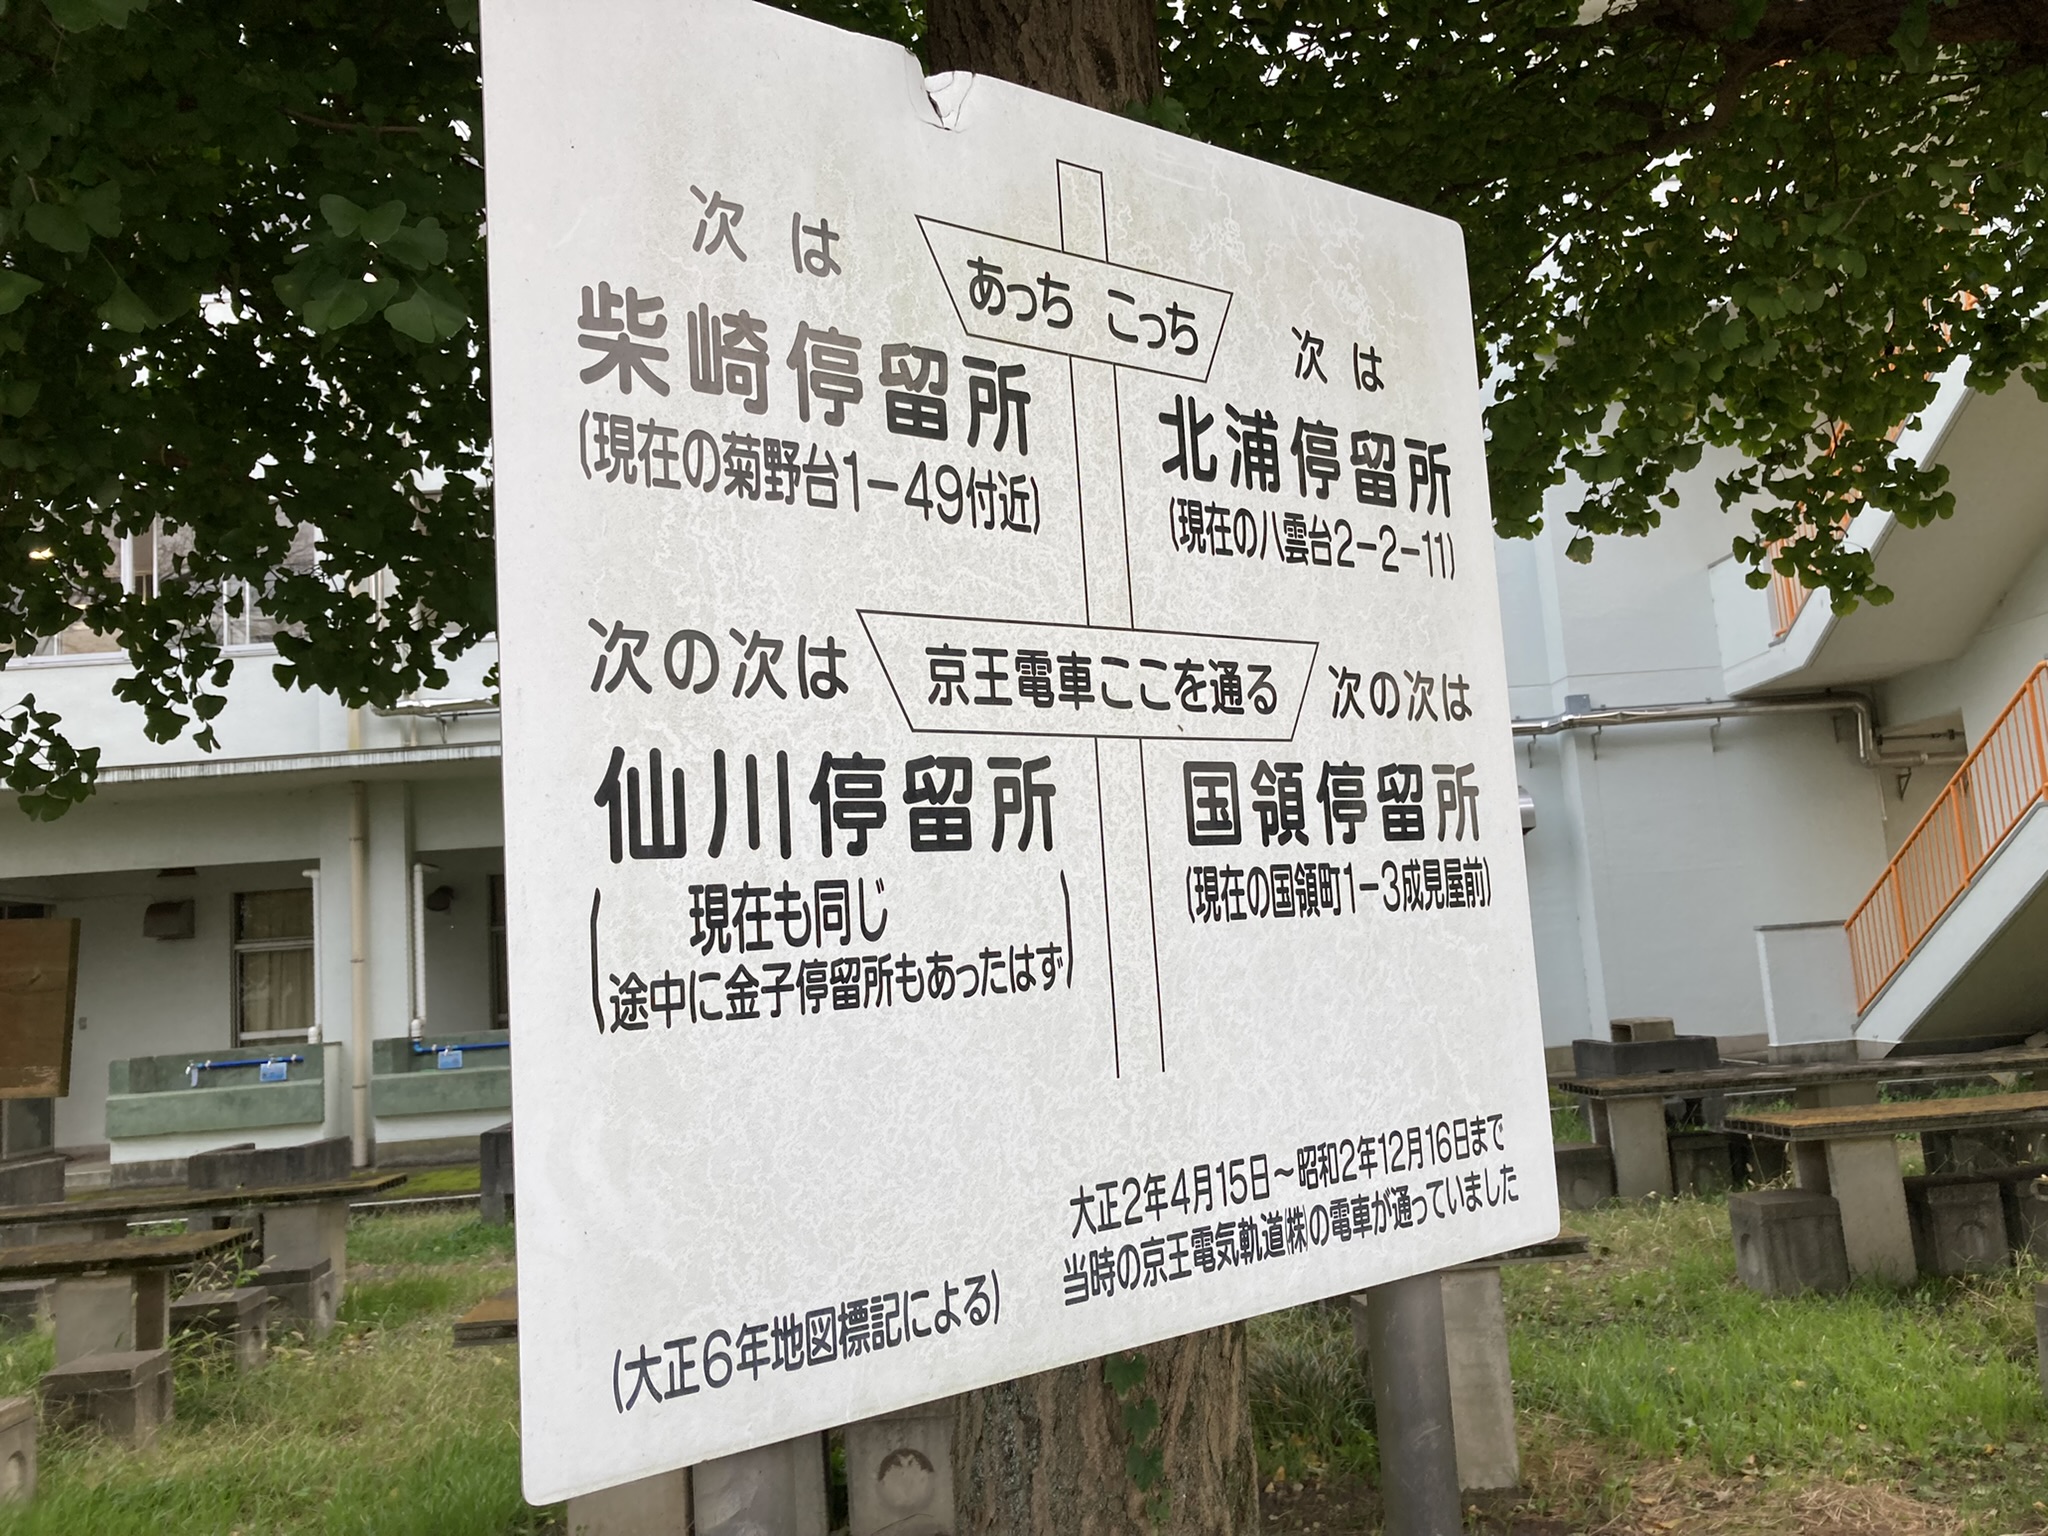 File:「京王電車ここを通る」の看板.jpg - Wikimedia Commons